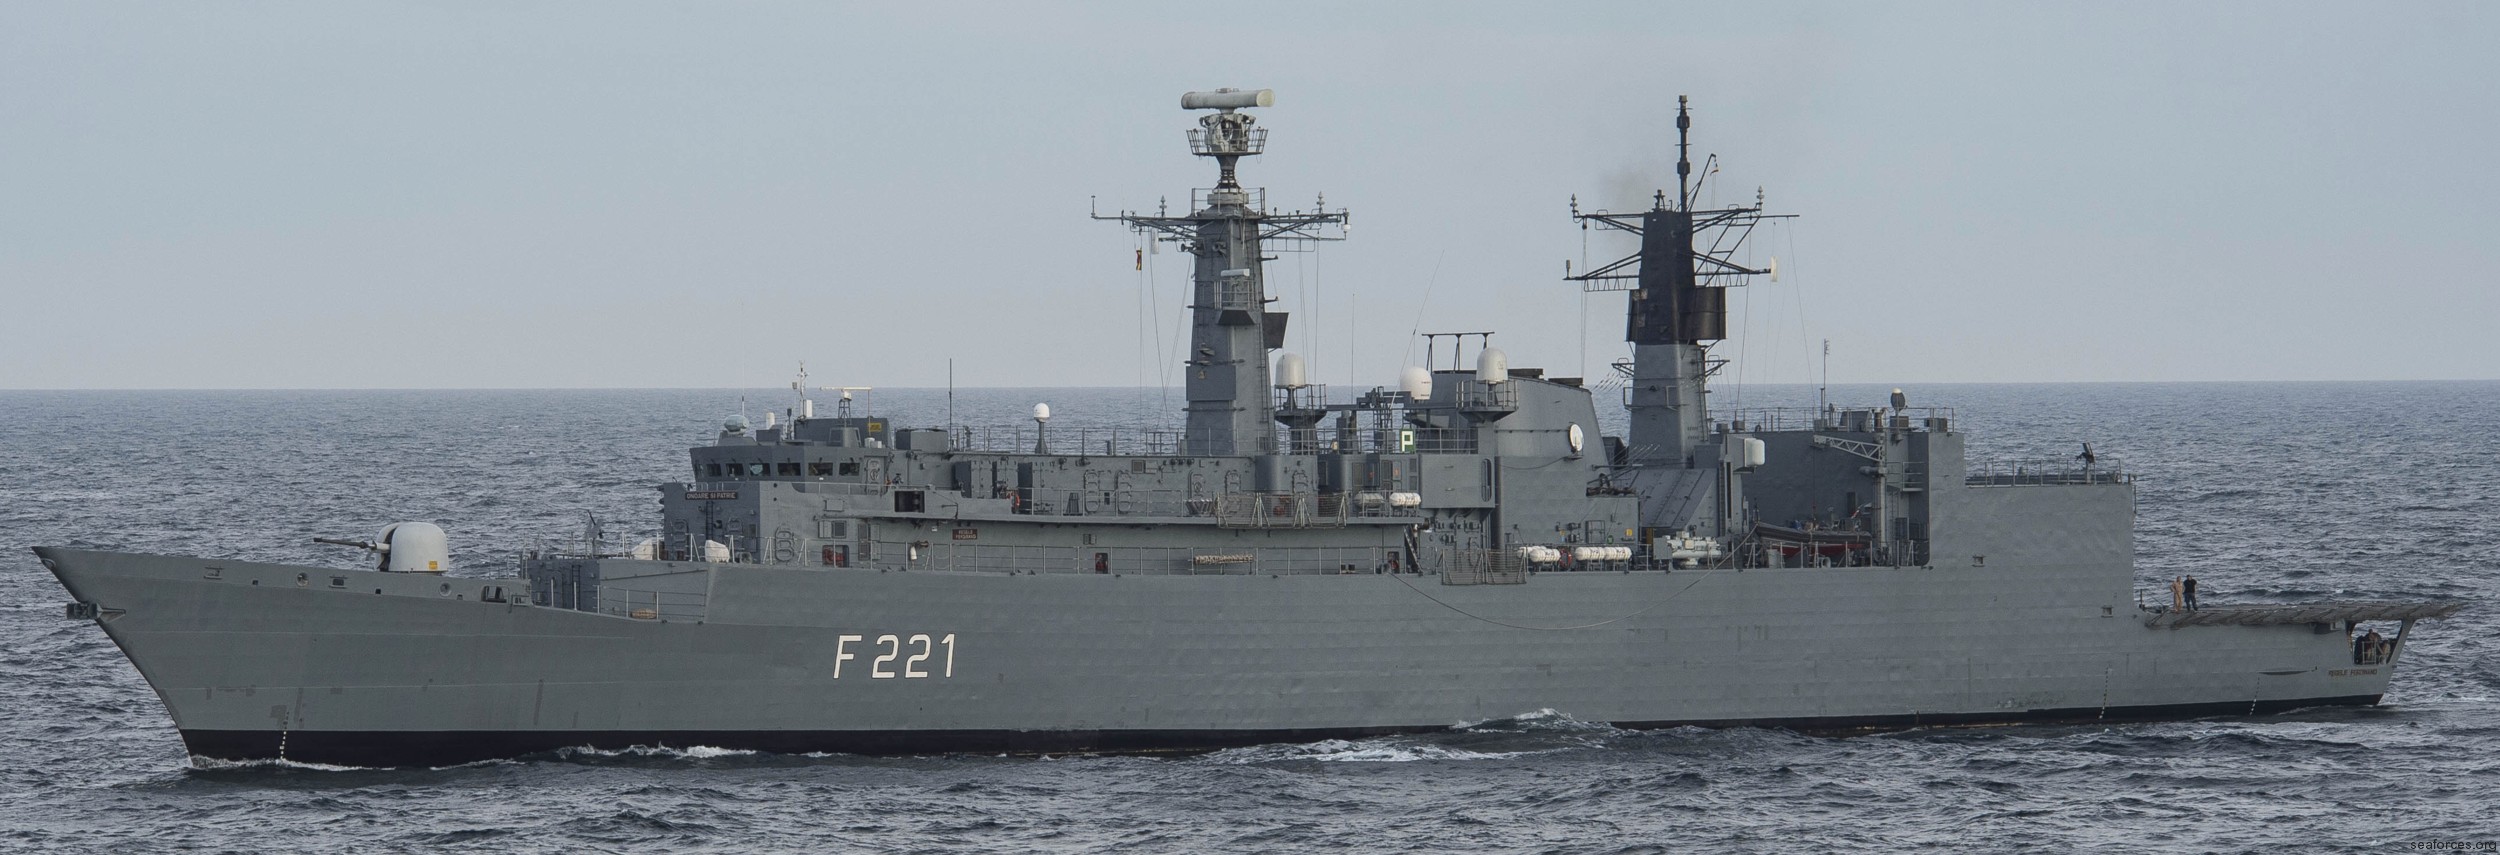 f-221 ros regele ferdinand frigate romanian navy type 22 broadsword class 22